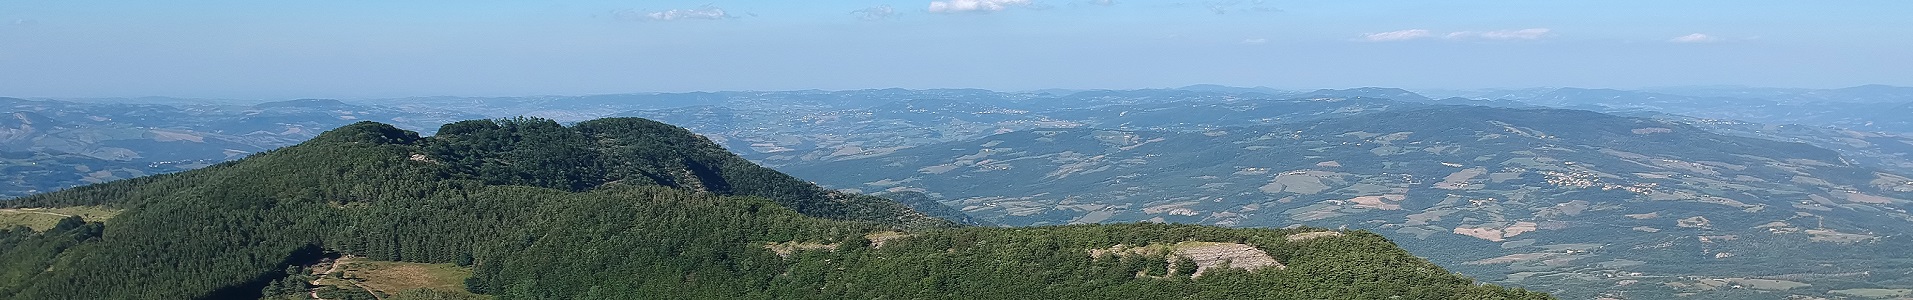 Foto panoramica di un paesaggio in Emilia-Romagna